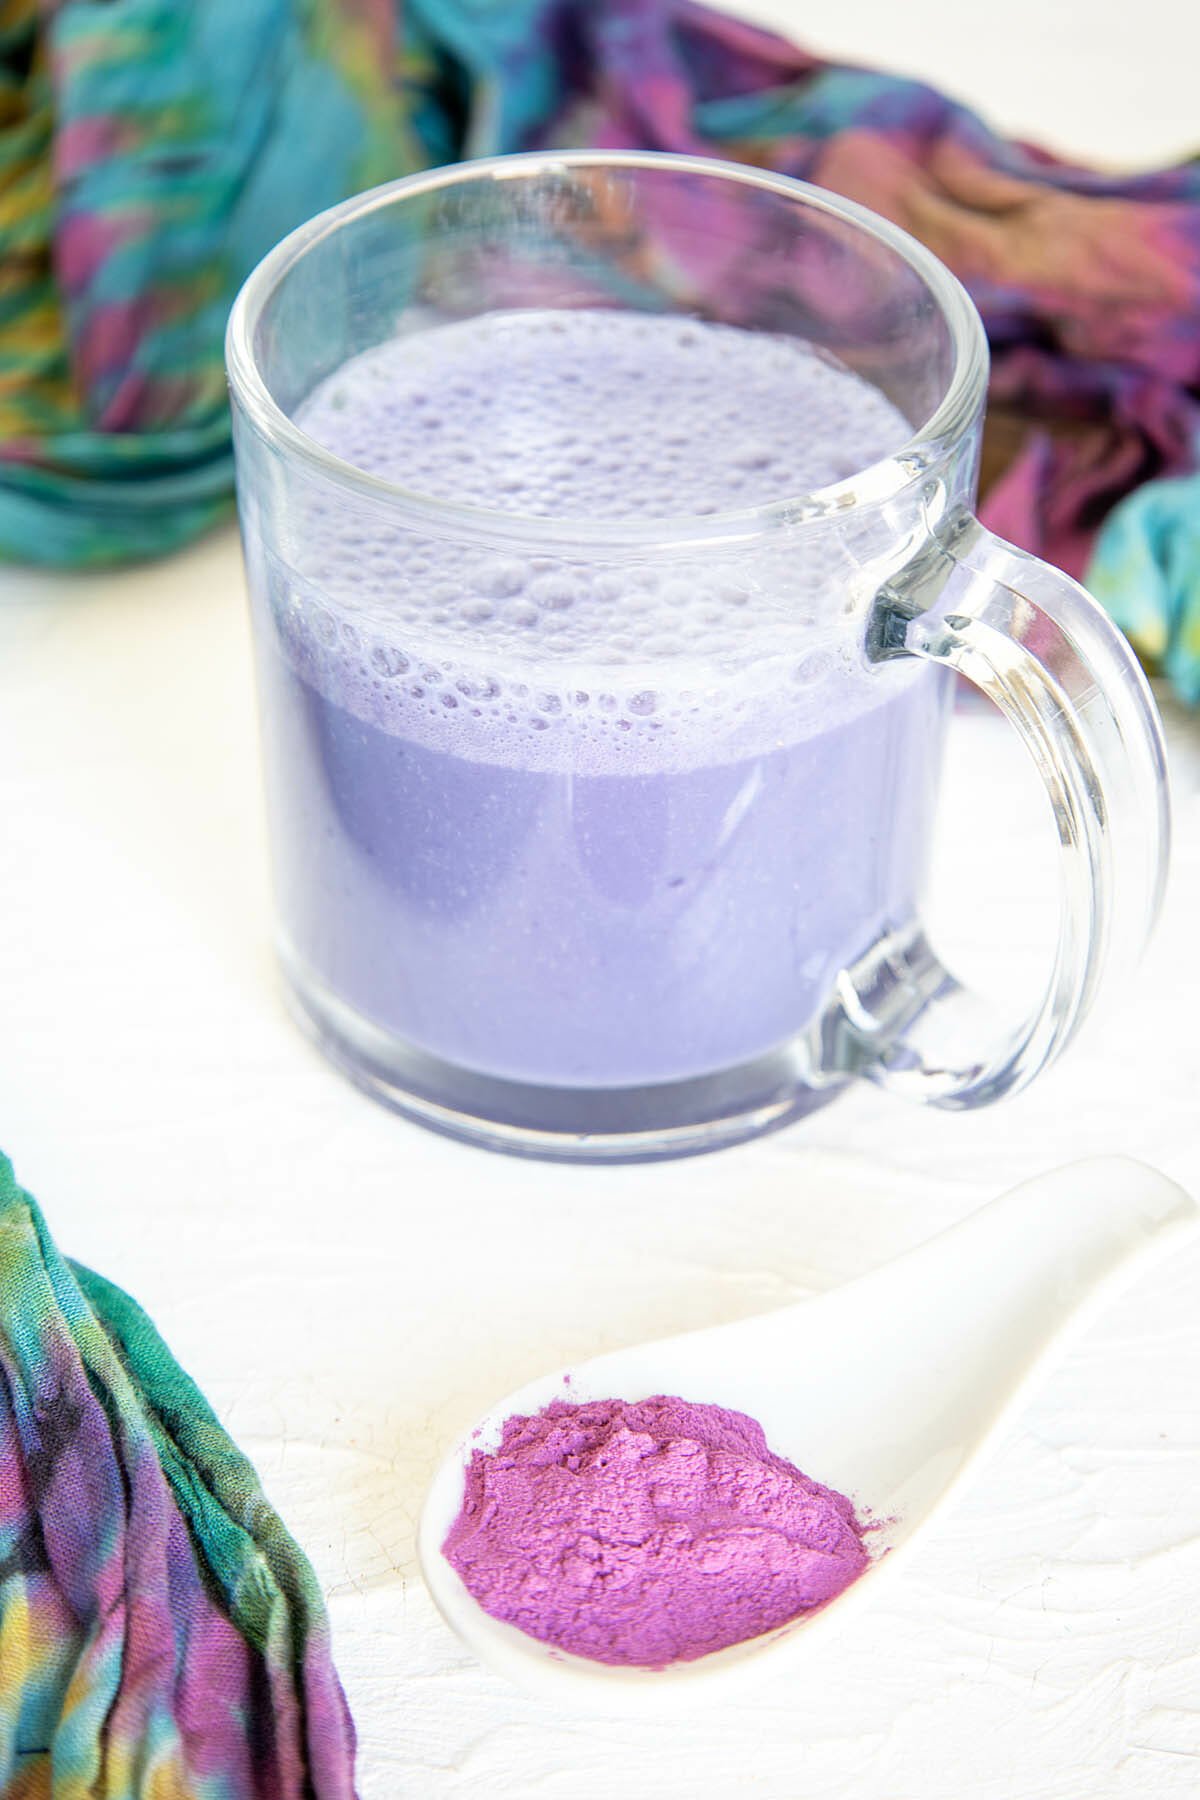 Purple Potato Latte with a spoonful of purple potato powder in the foreground.